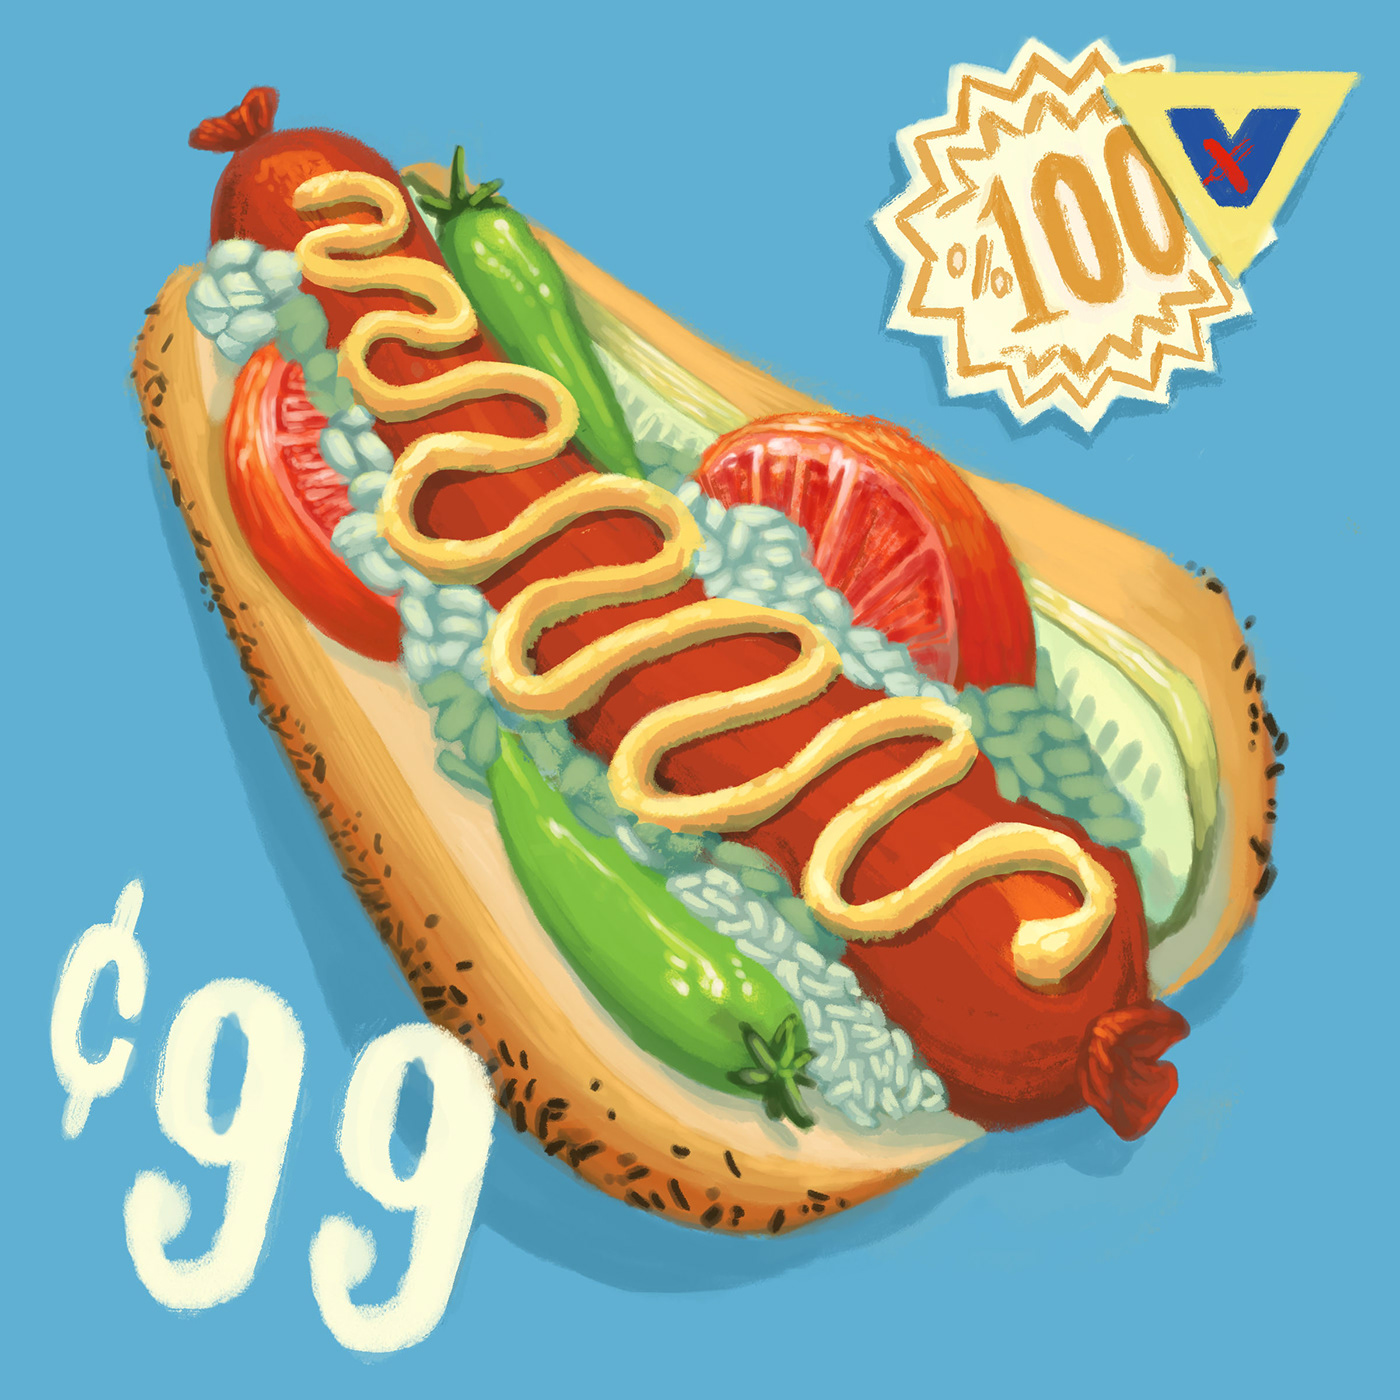 hot dog vienna beef chicago chicago style Fast food